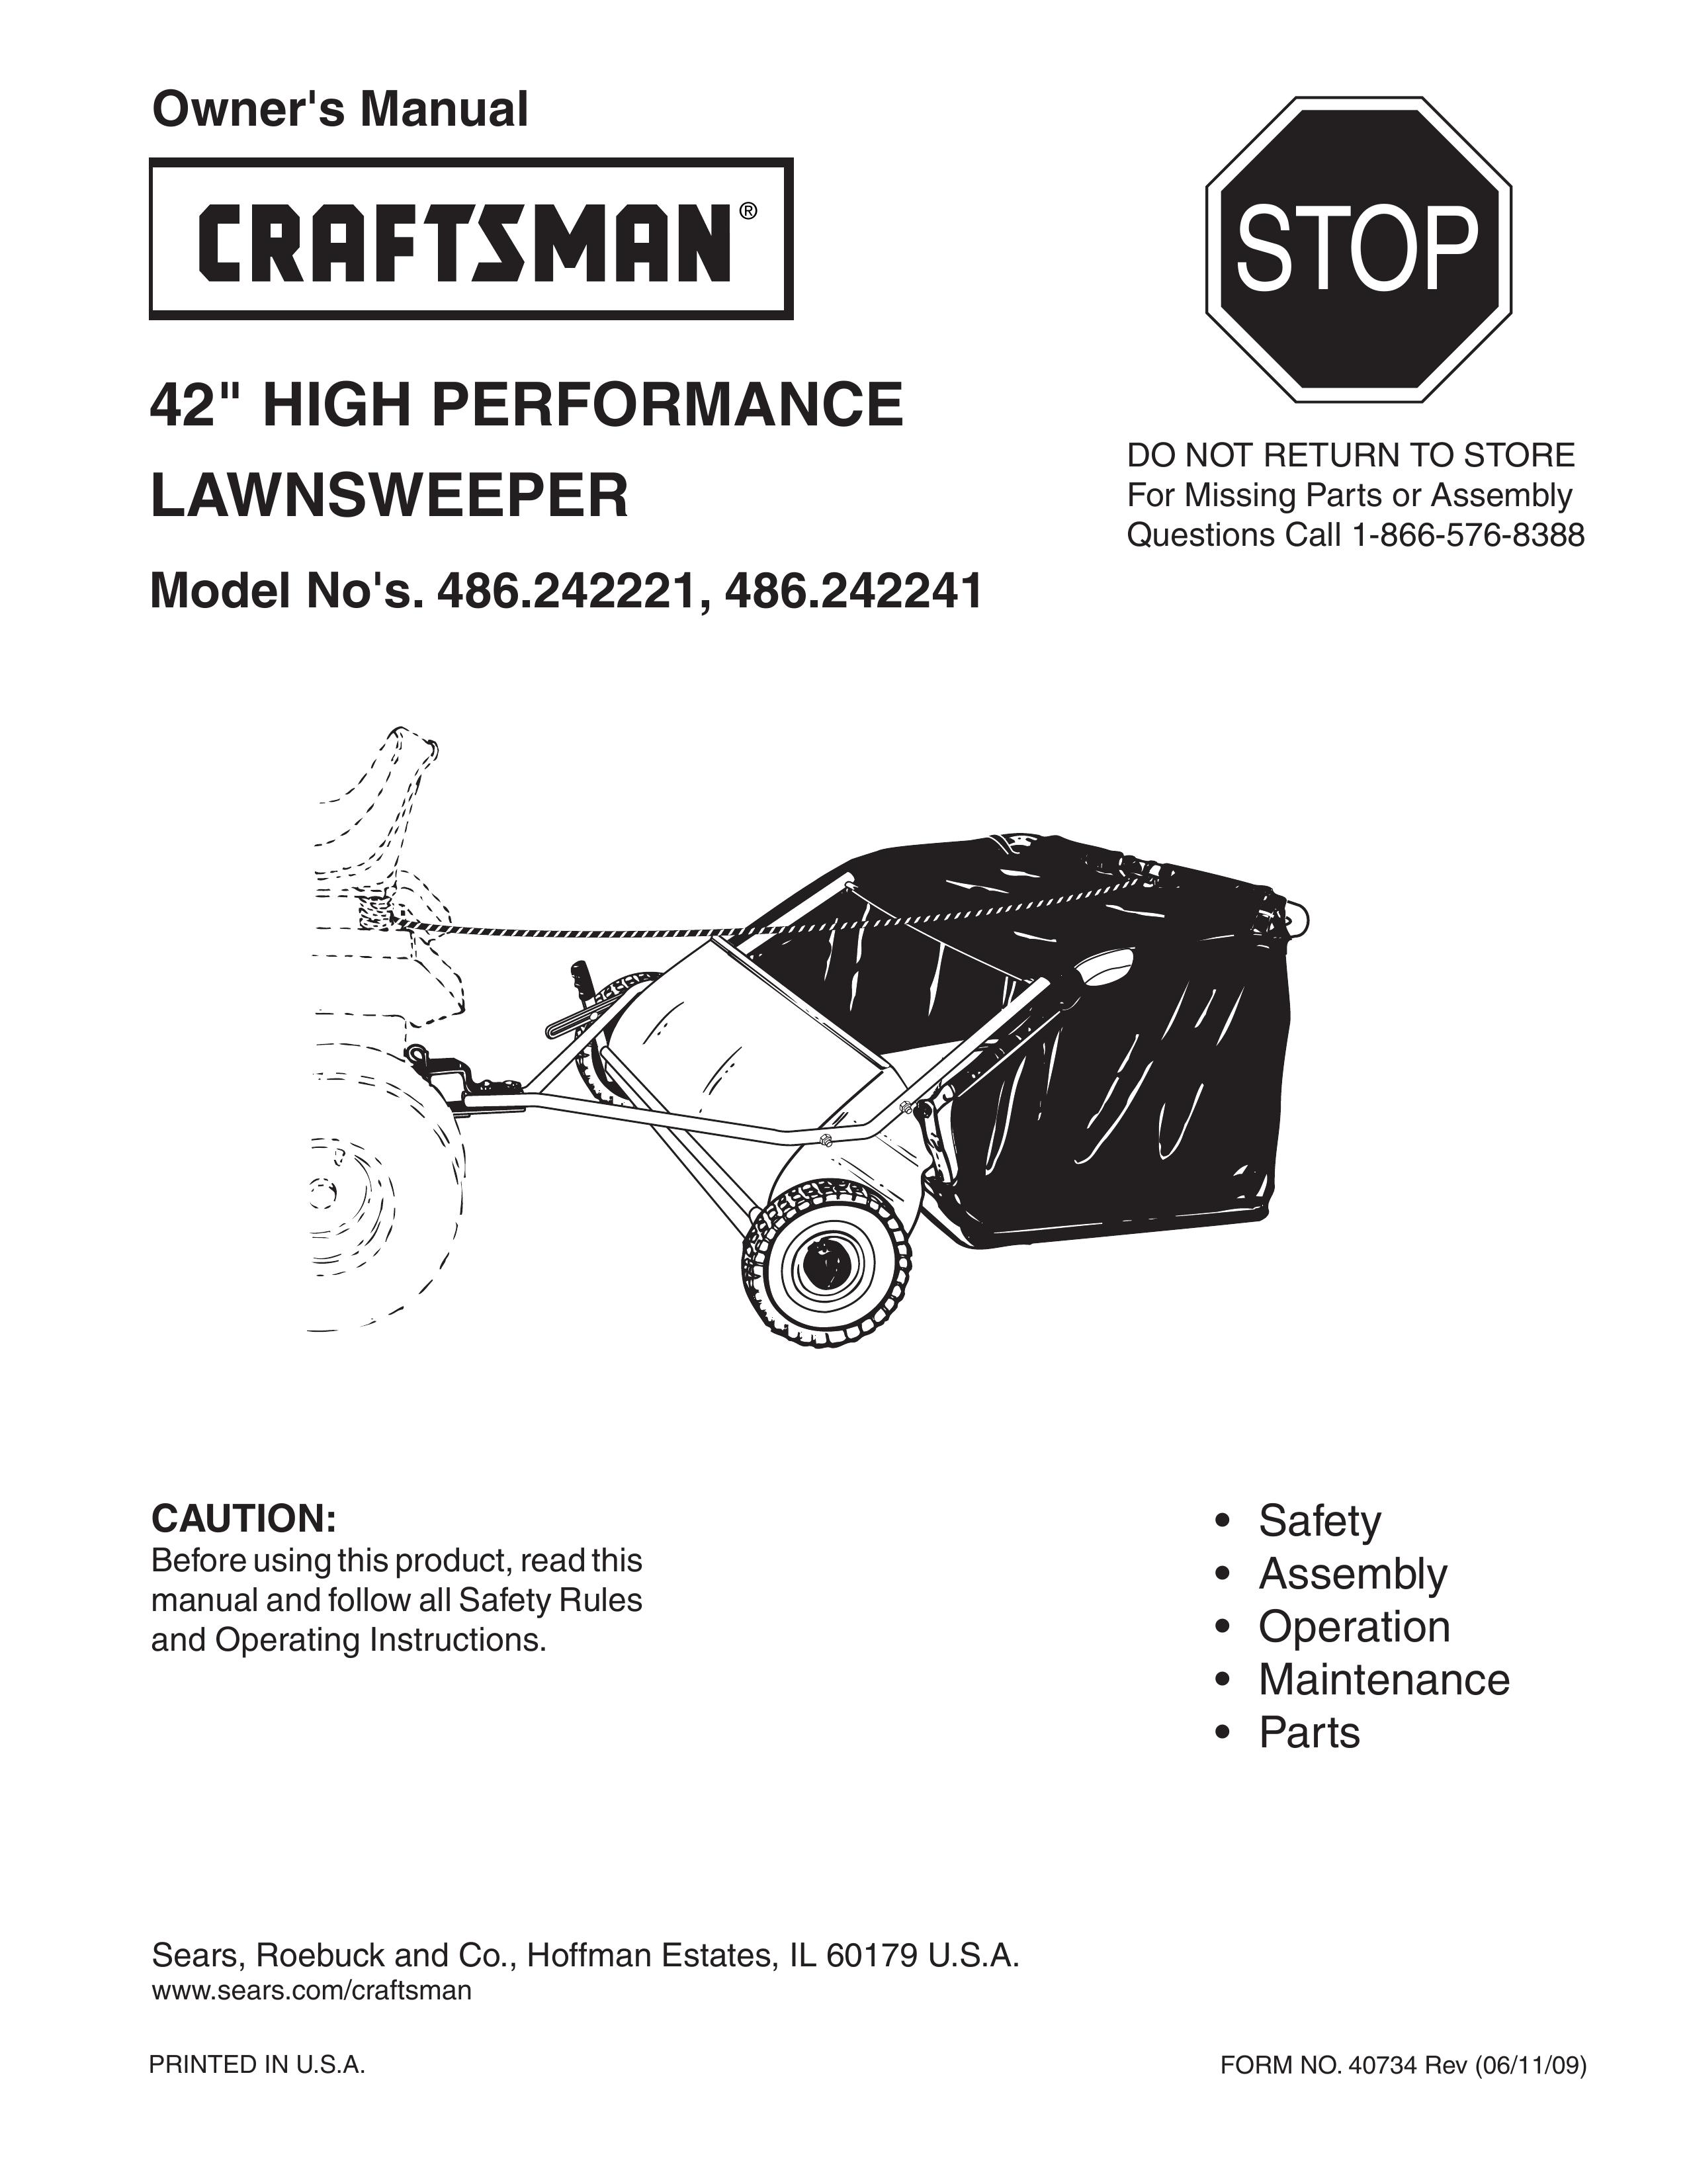 Craftsman 486.242241 Lawn Sweeper User Manual